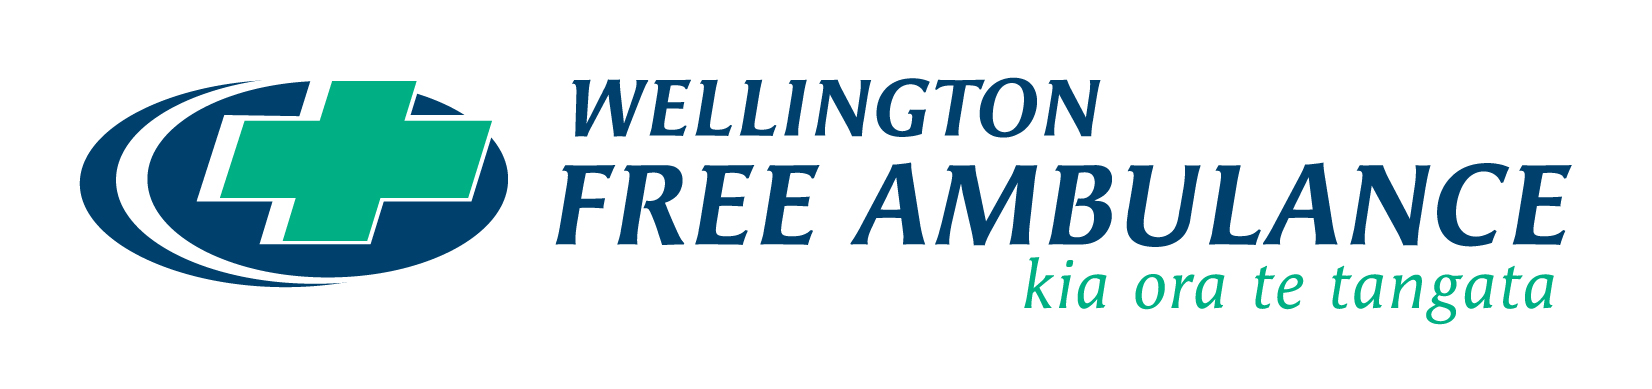 File:Wellington Free Ambulance Landscape Logo 2014.jpg - Wikipedia ...